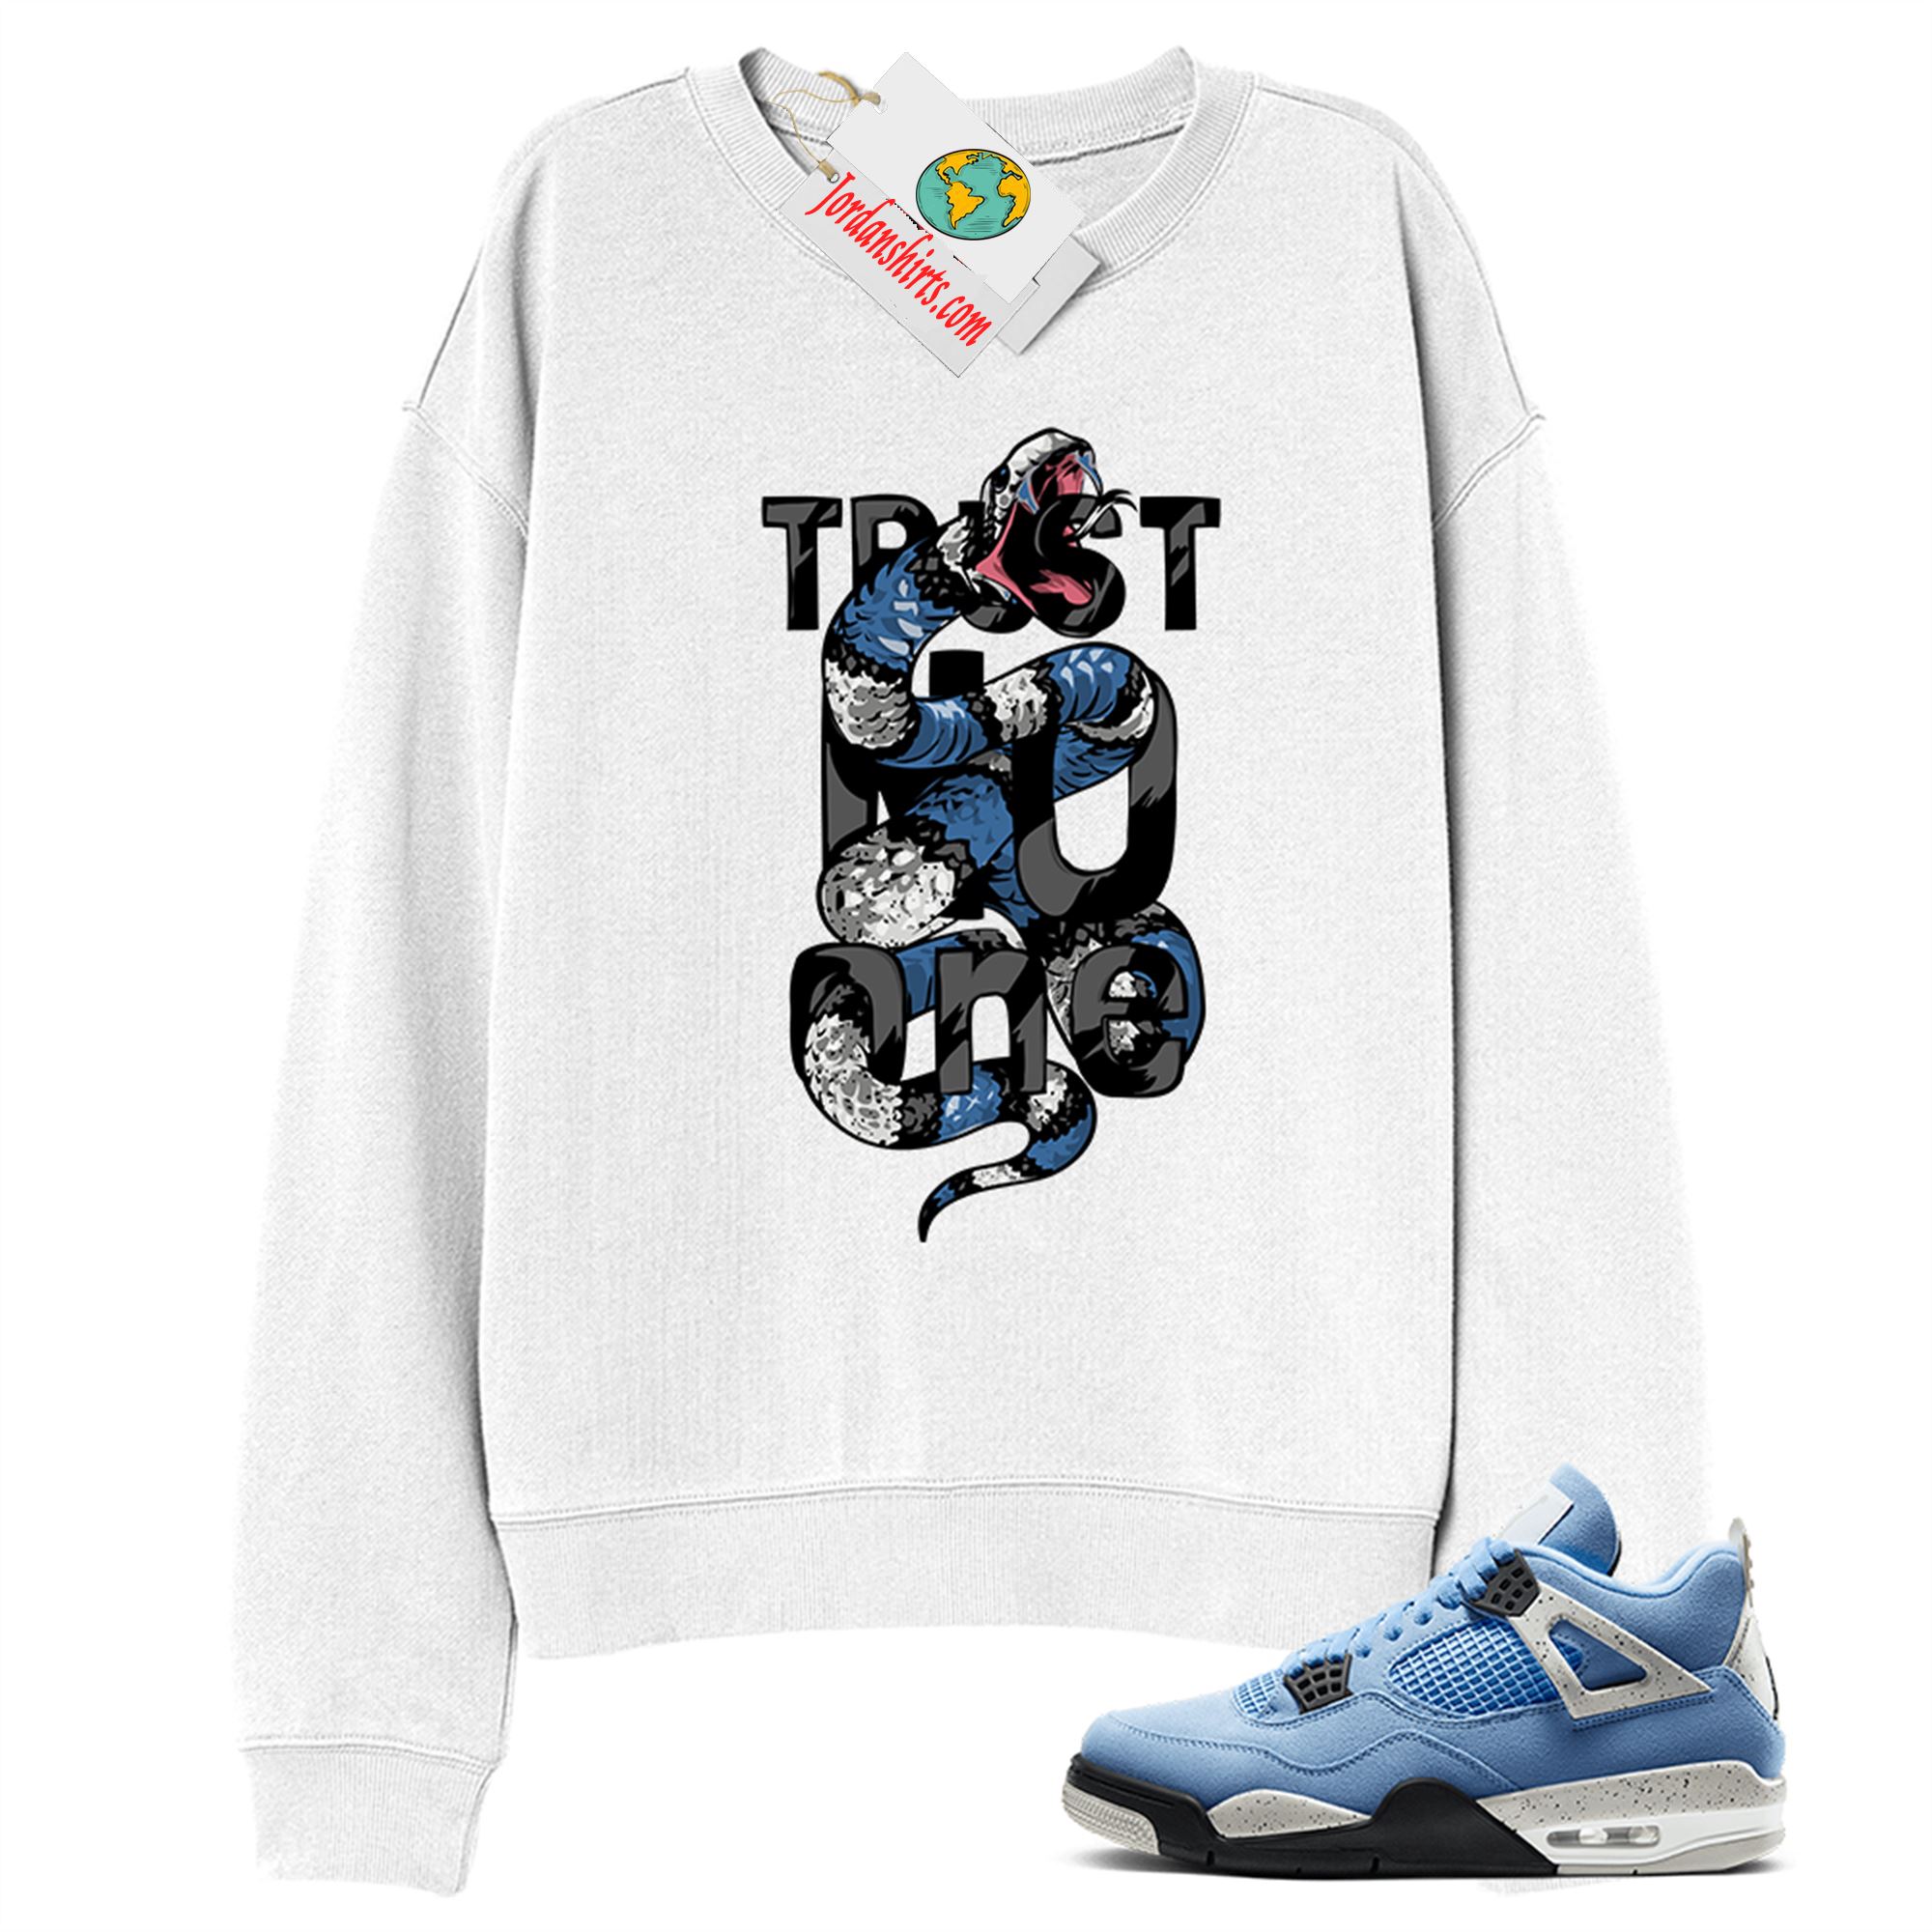 Jordan 4 Sweatshirt, Trust No One King Snake White Sweatshirt Air Jordan 4 University Blue 4s Size Up To 5xl